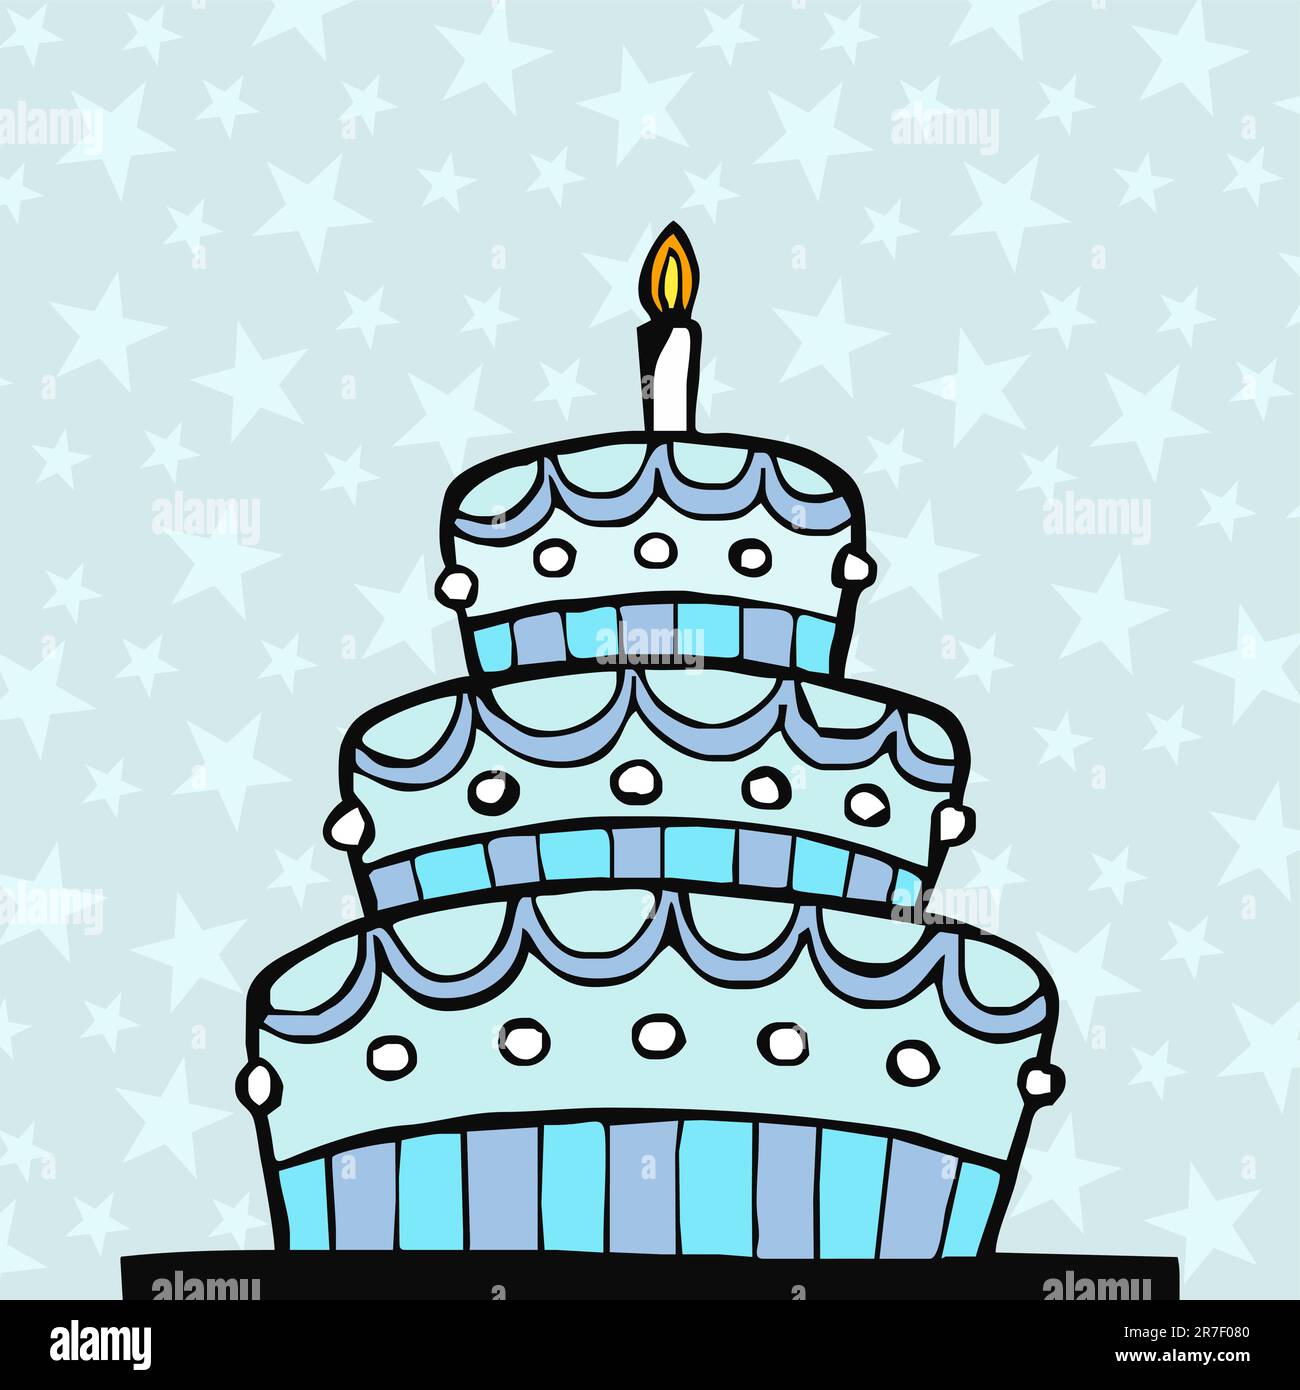 llight blue birthday cake on light blue background with stars Stock Vector